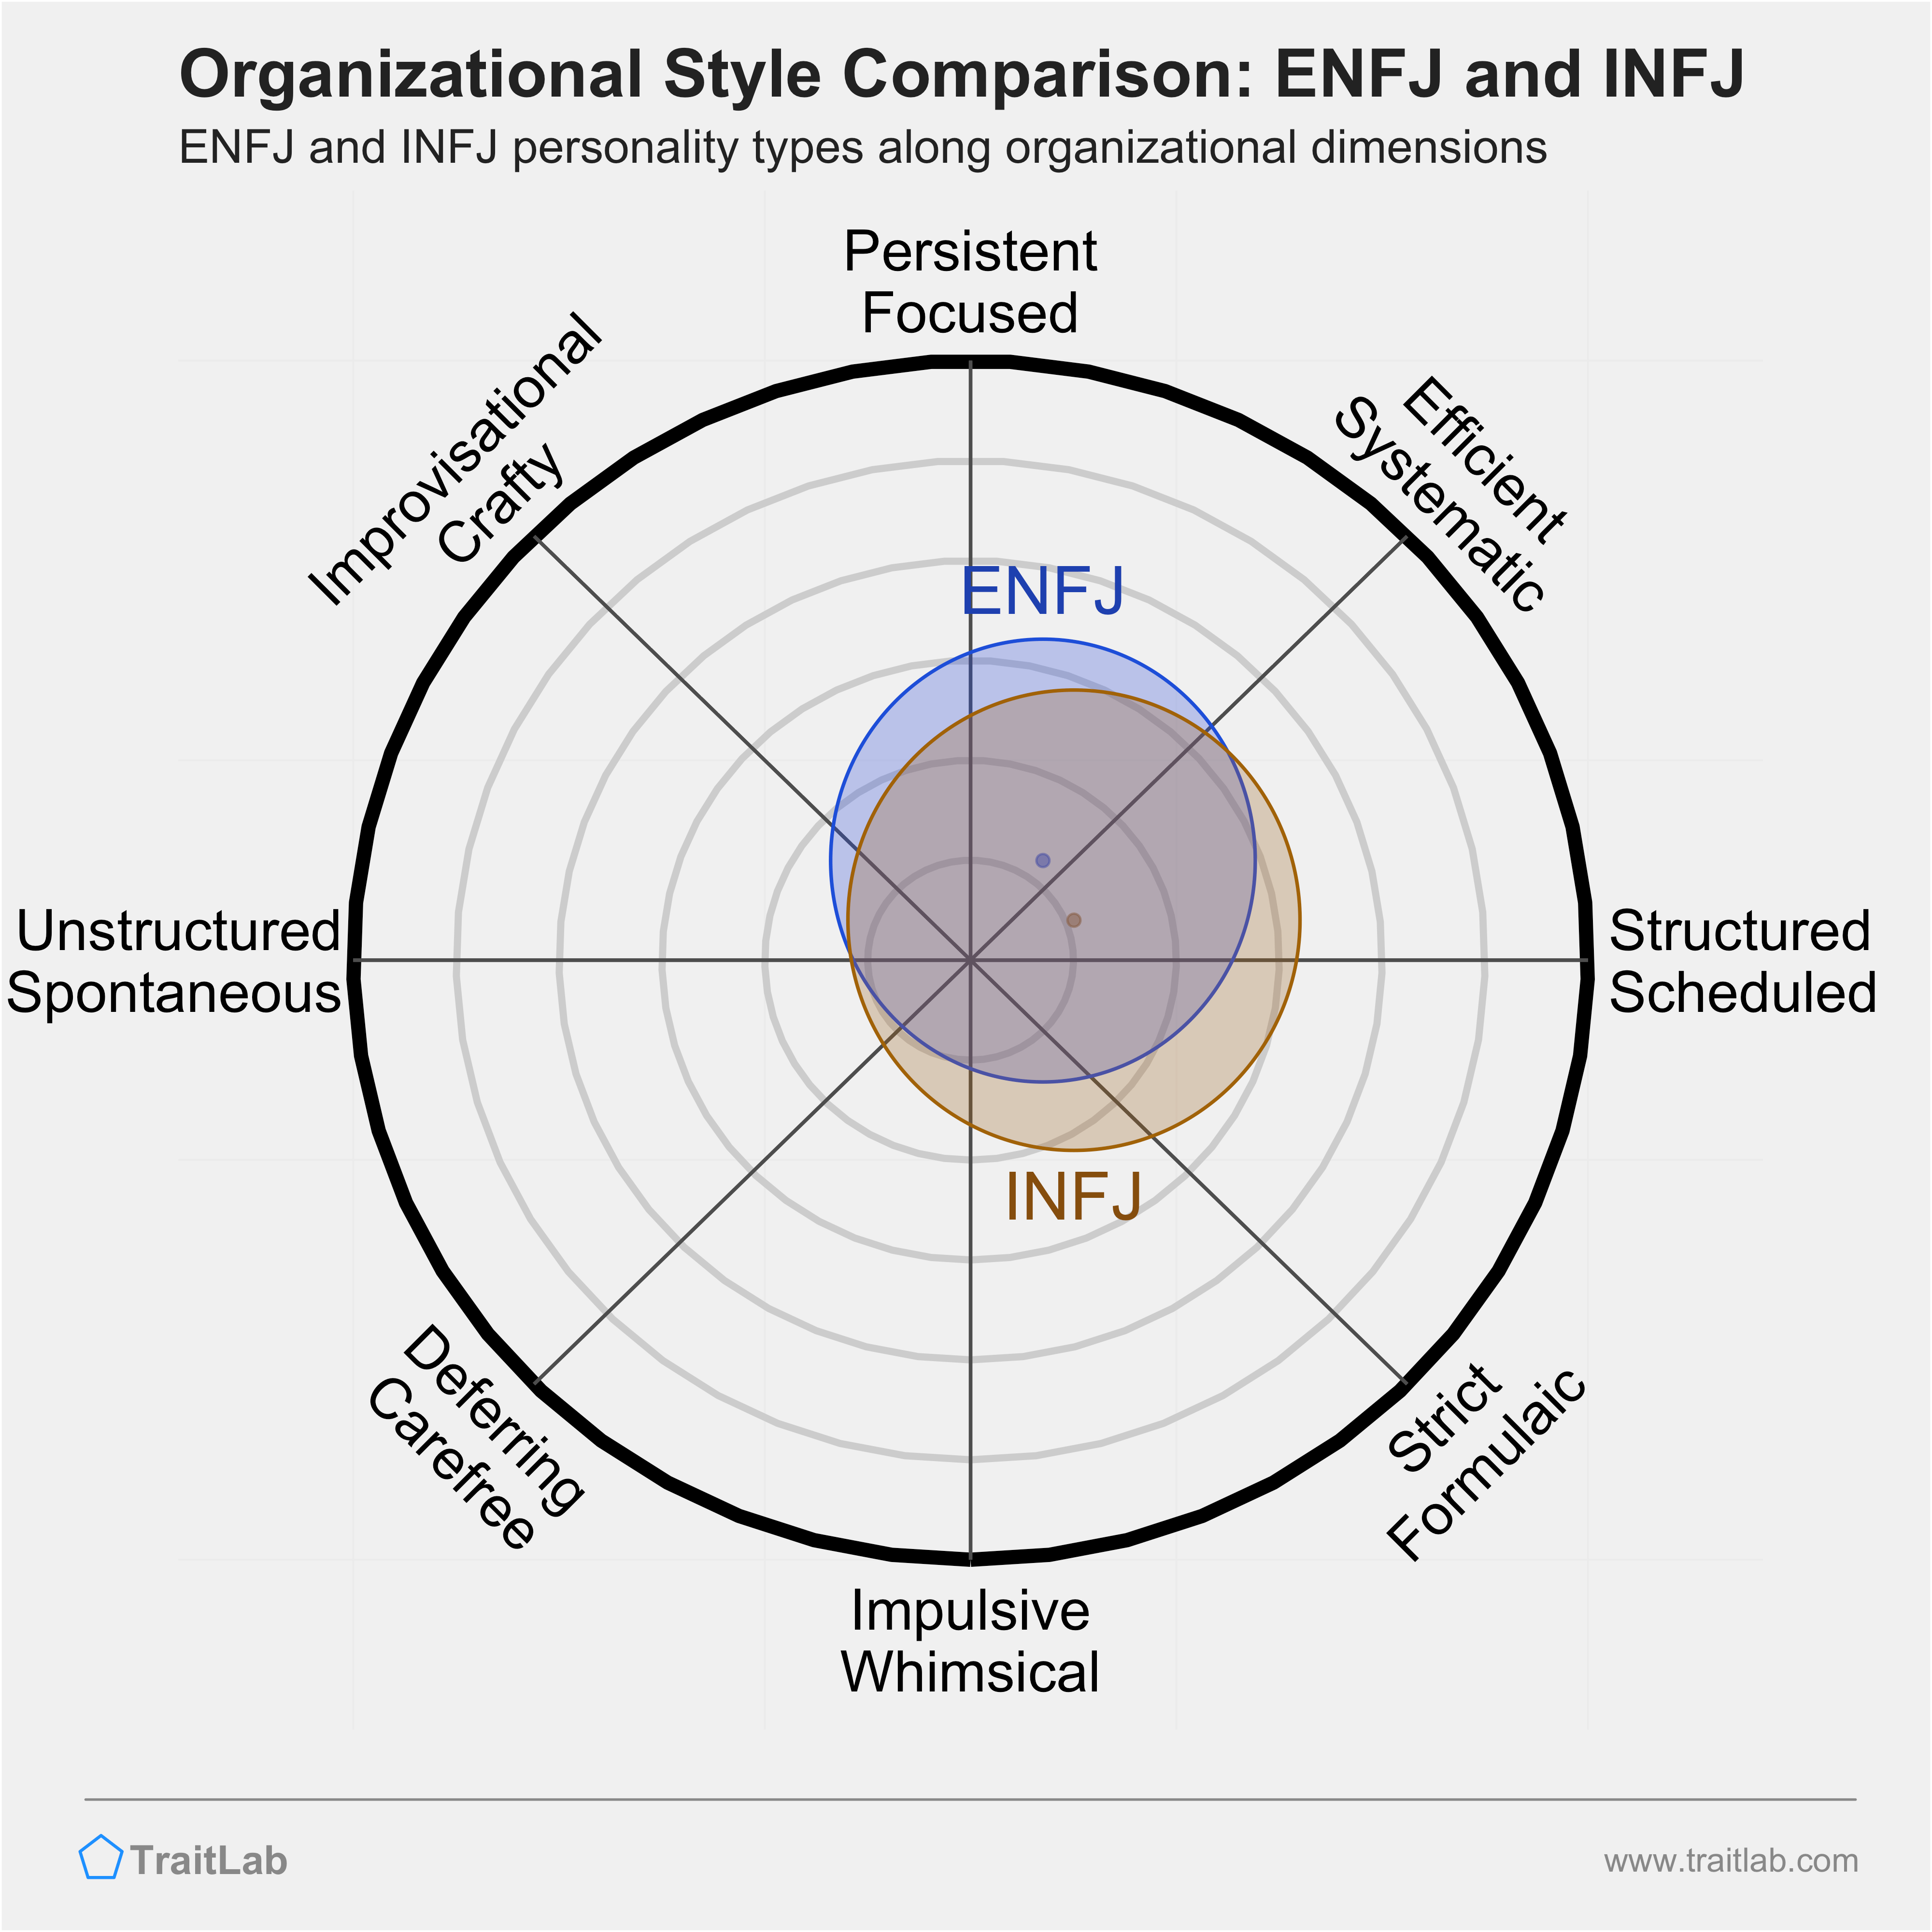 ENFJ and INFJ comparison across organizational dimensions